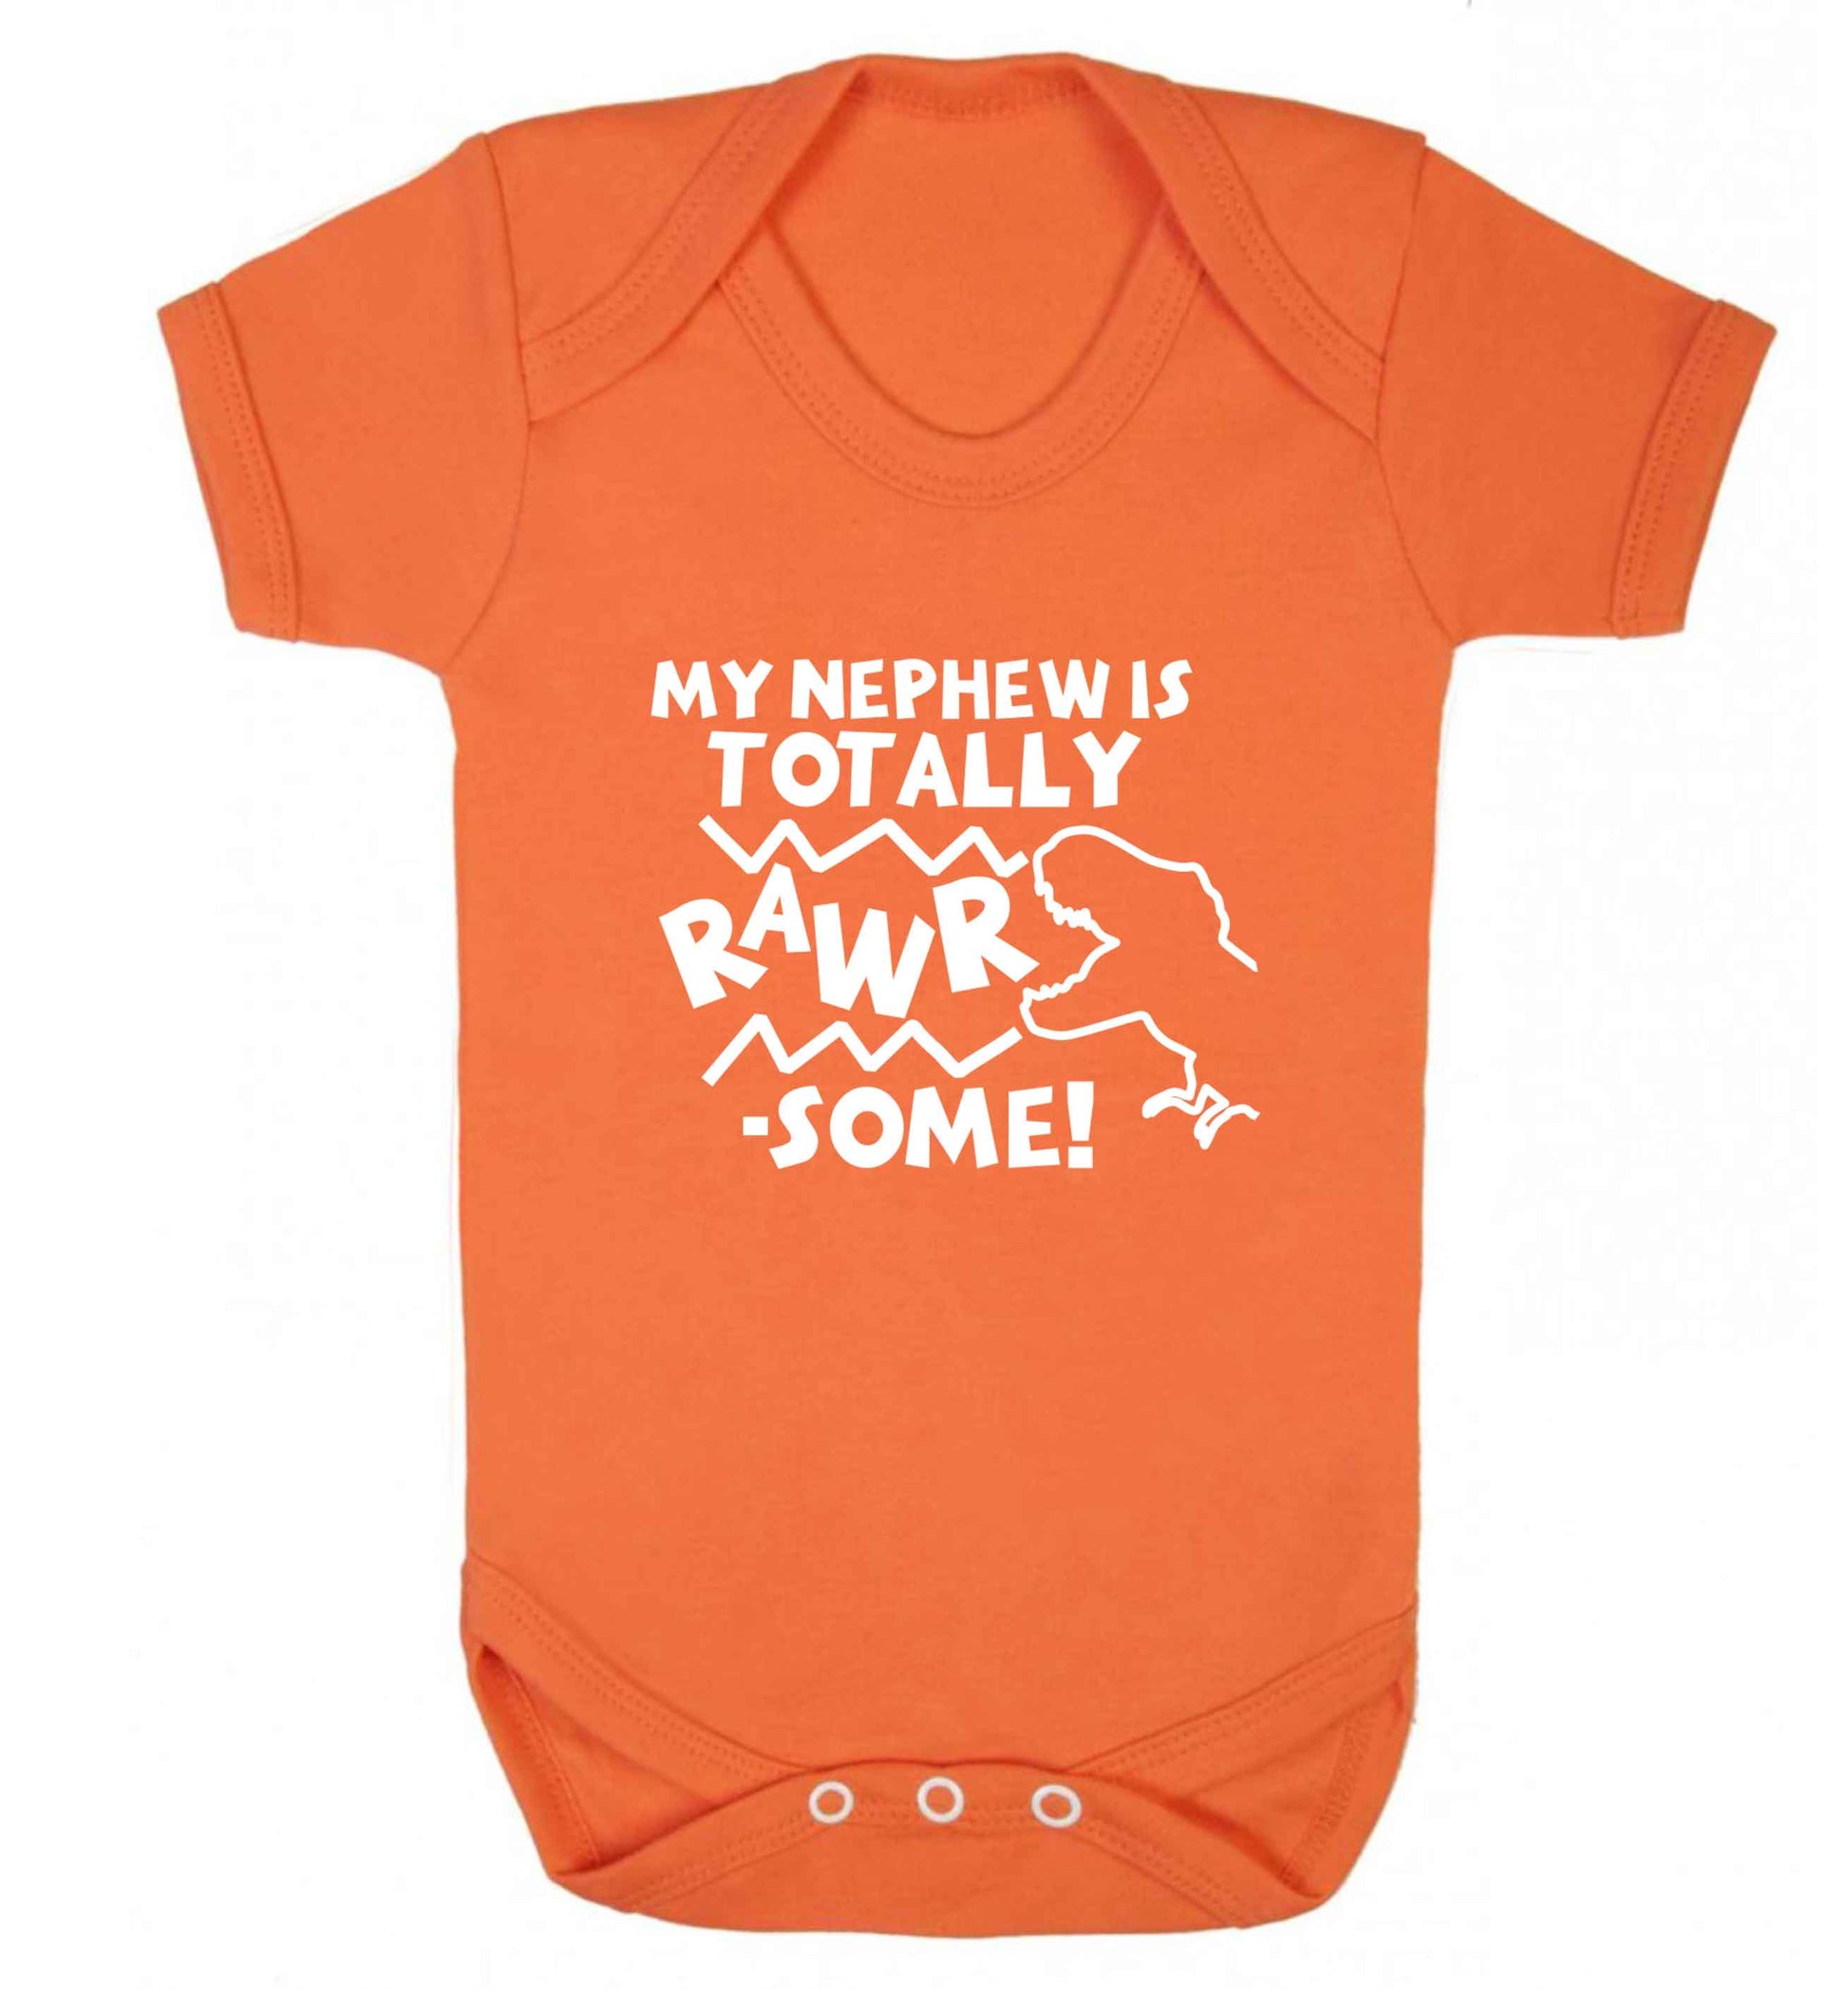 My nephew is totally rawrsome baby vest orange 18-24 months